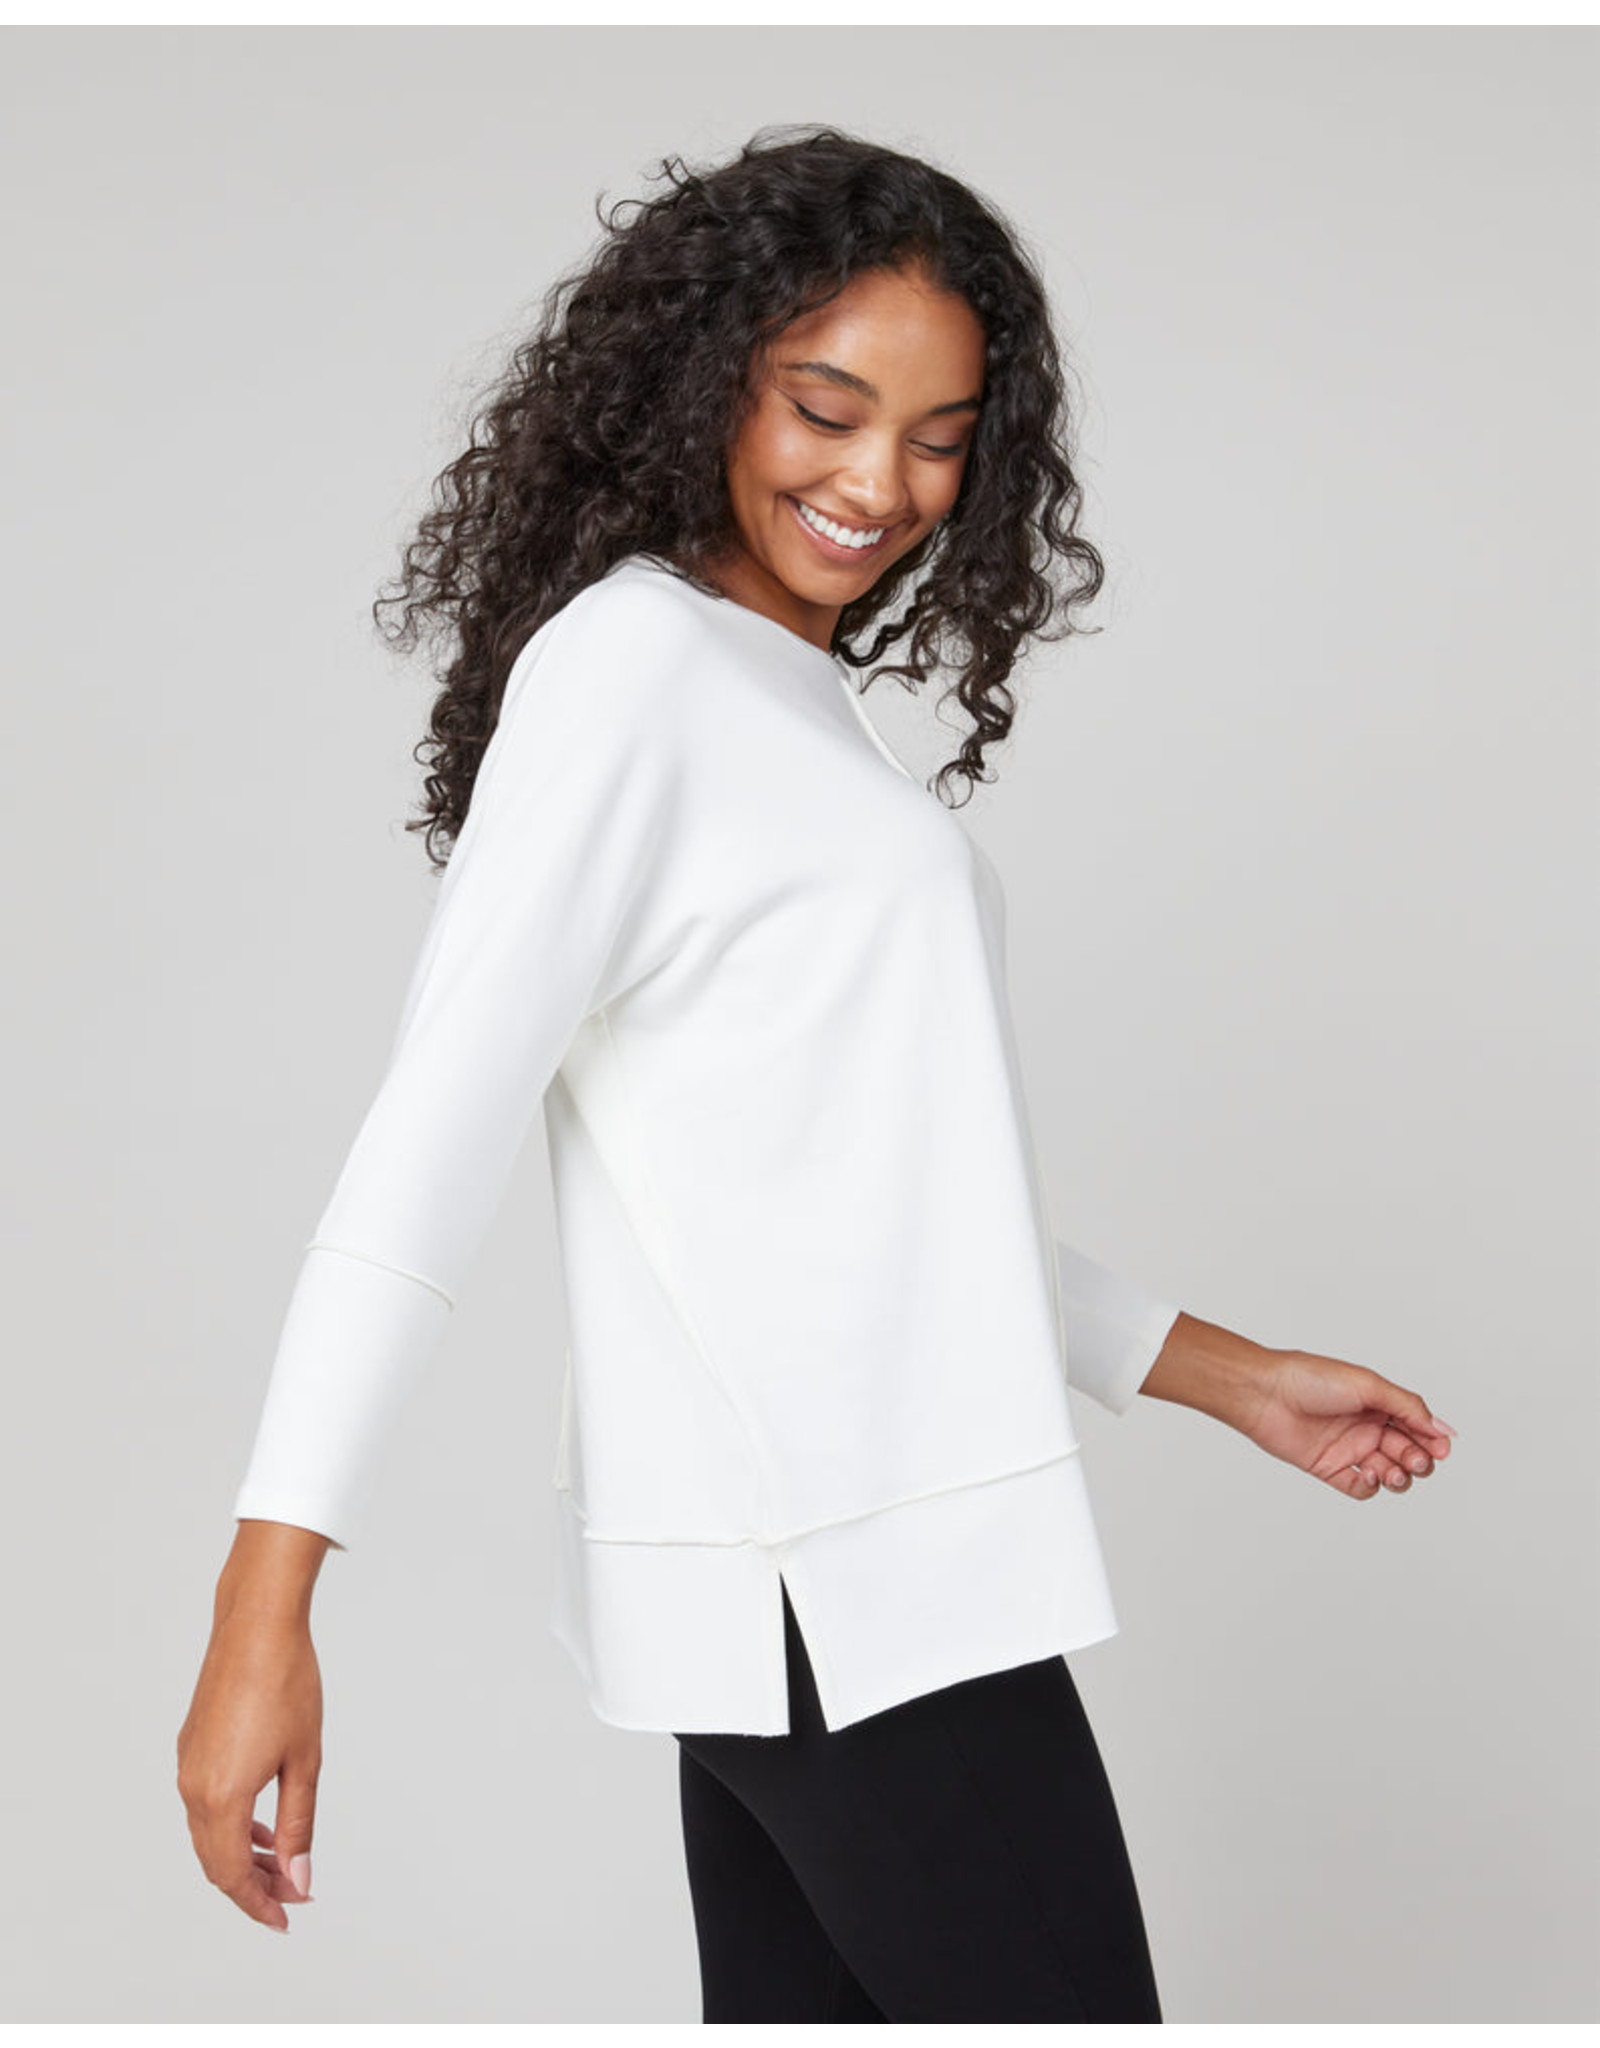 SPANX - 50171R Black Perfect Length Top Dolman 3/4 Sleeve Shirt - Women's  Small 